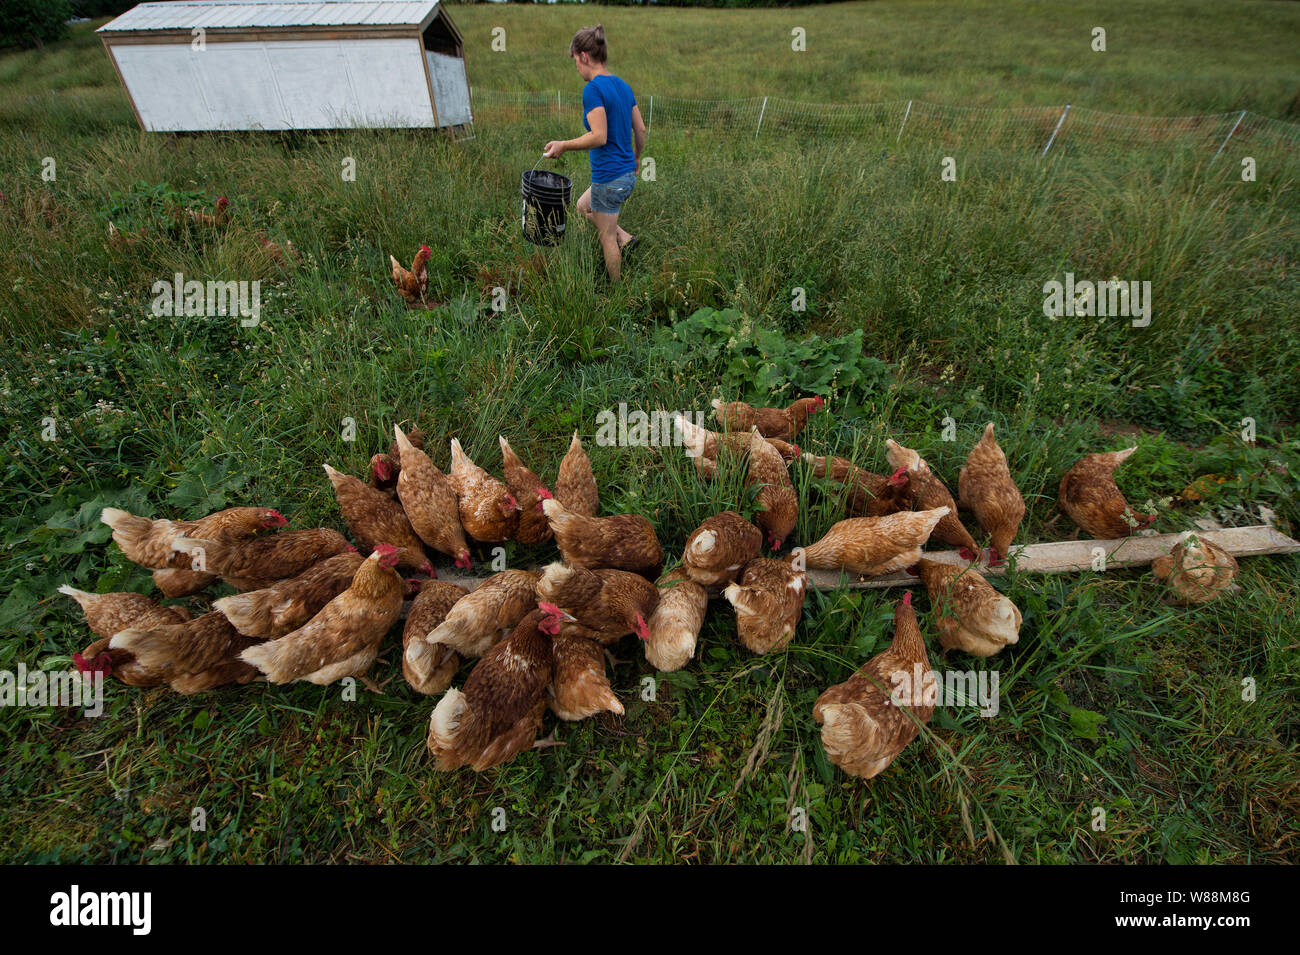 https://c8.alamy.com/comp/W88M8G/united-states-june-7-2019-molly-kroiz-feeds-chickens-at-the-family-farm-in-lovettsville-photo-by-douglas-grahamwlp-W88M8G.jpg